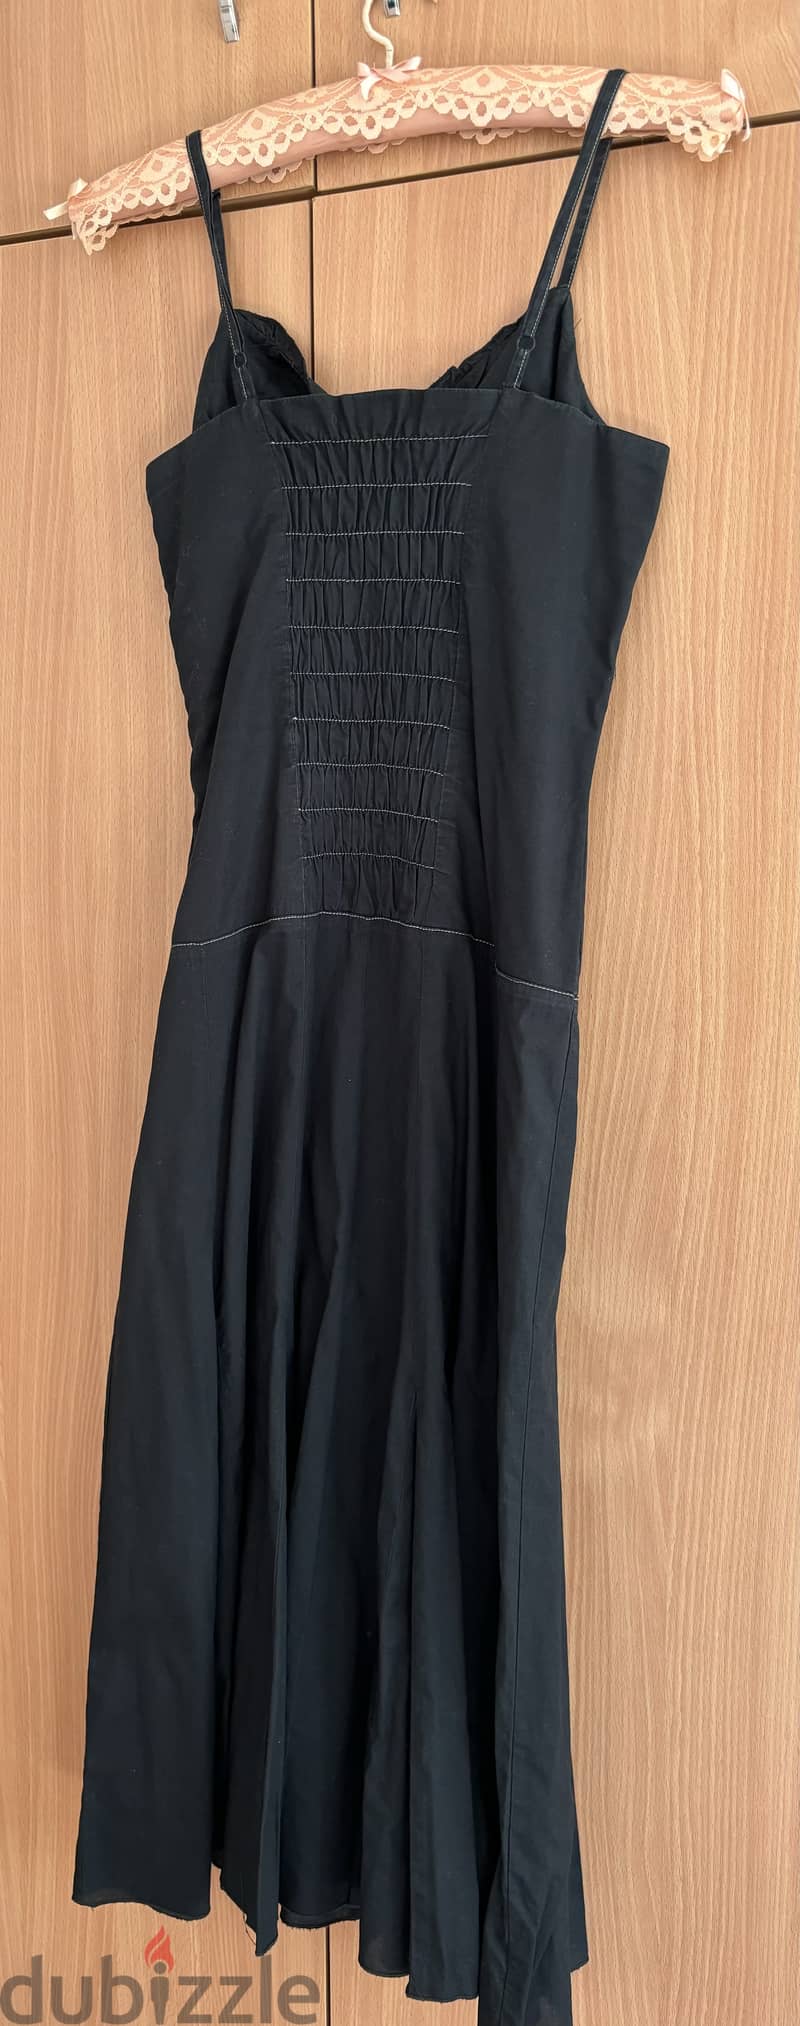 Black dress 3